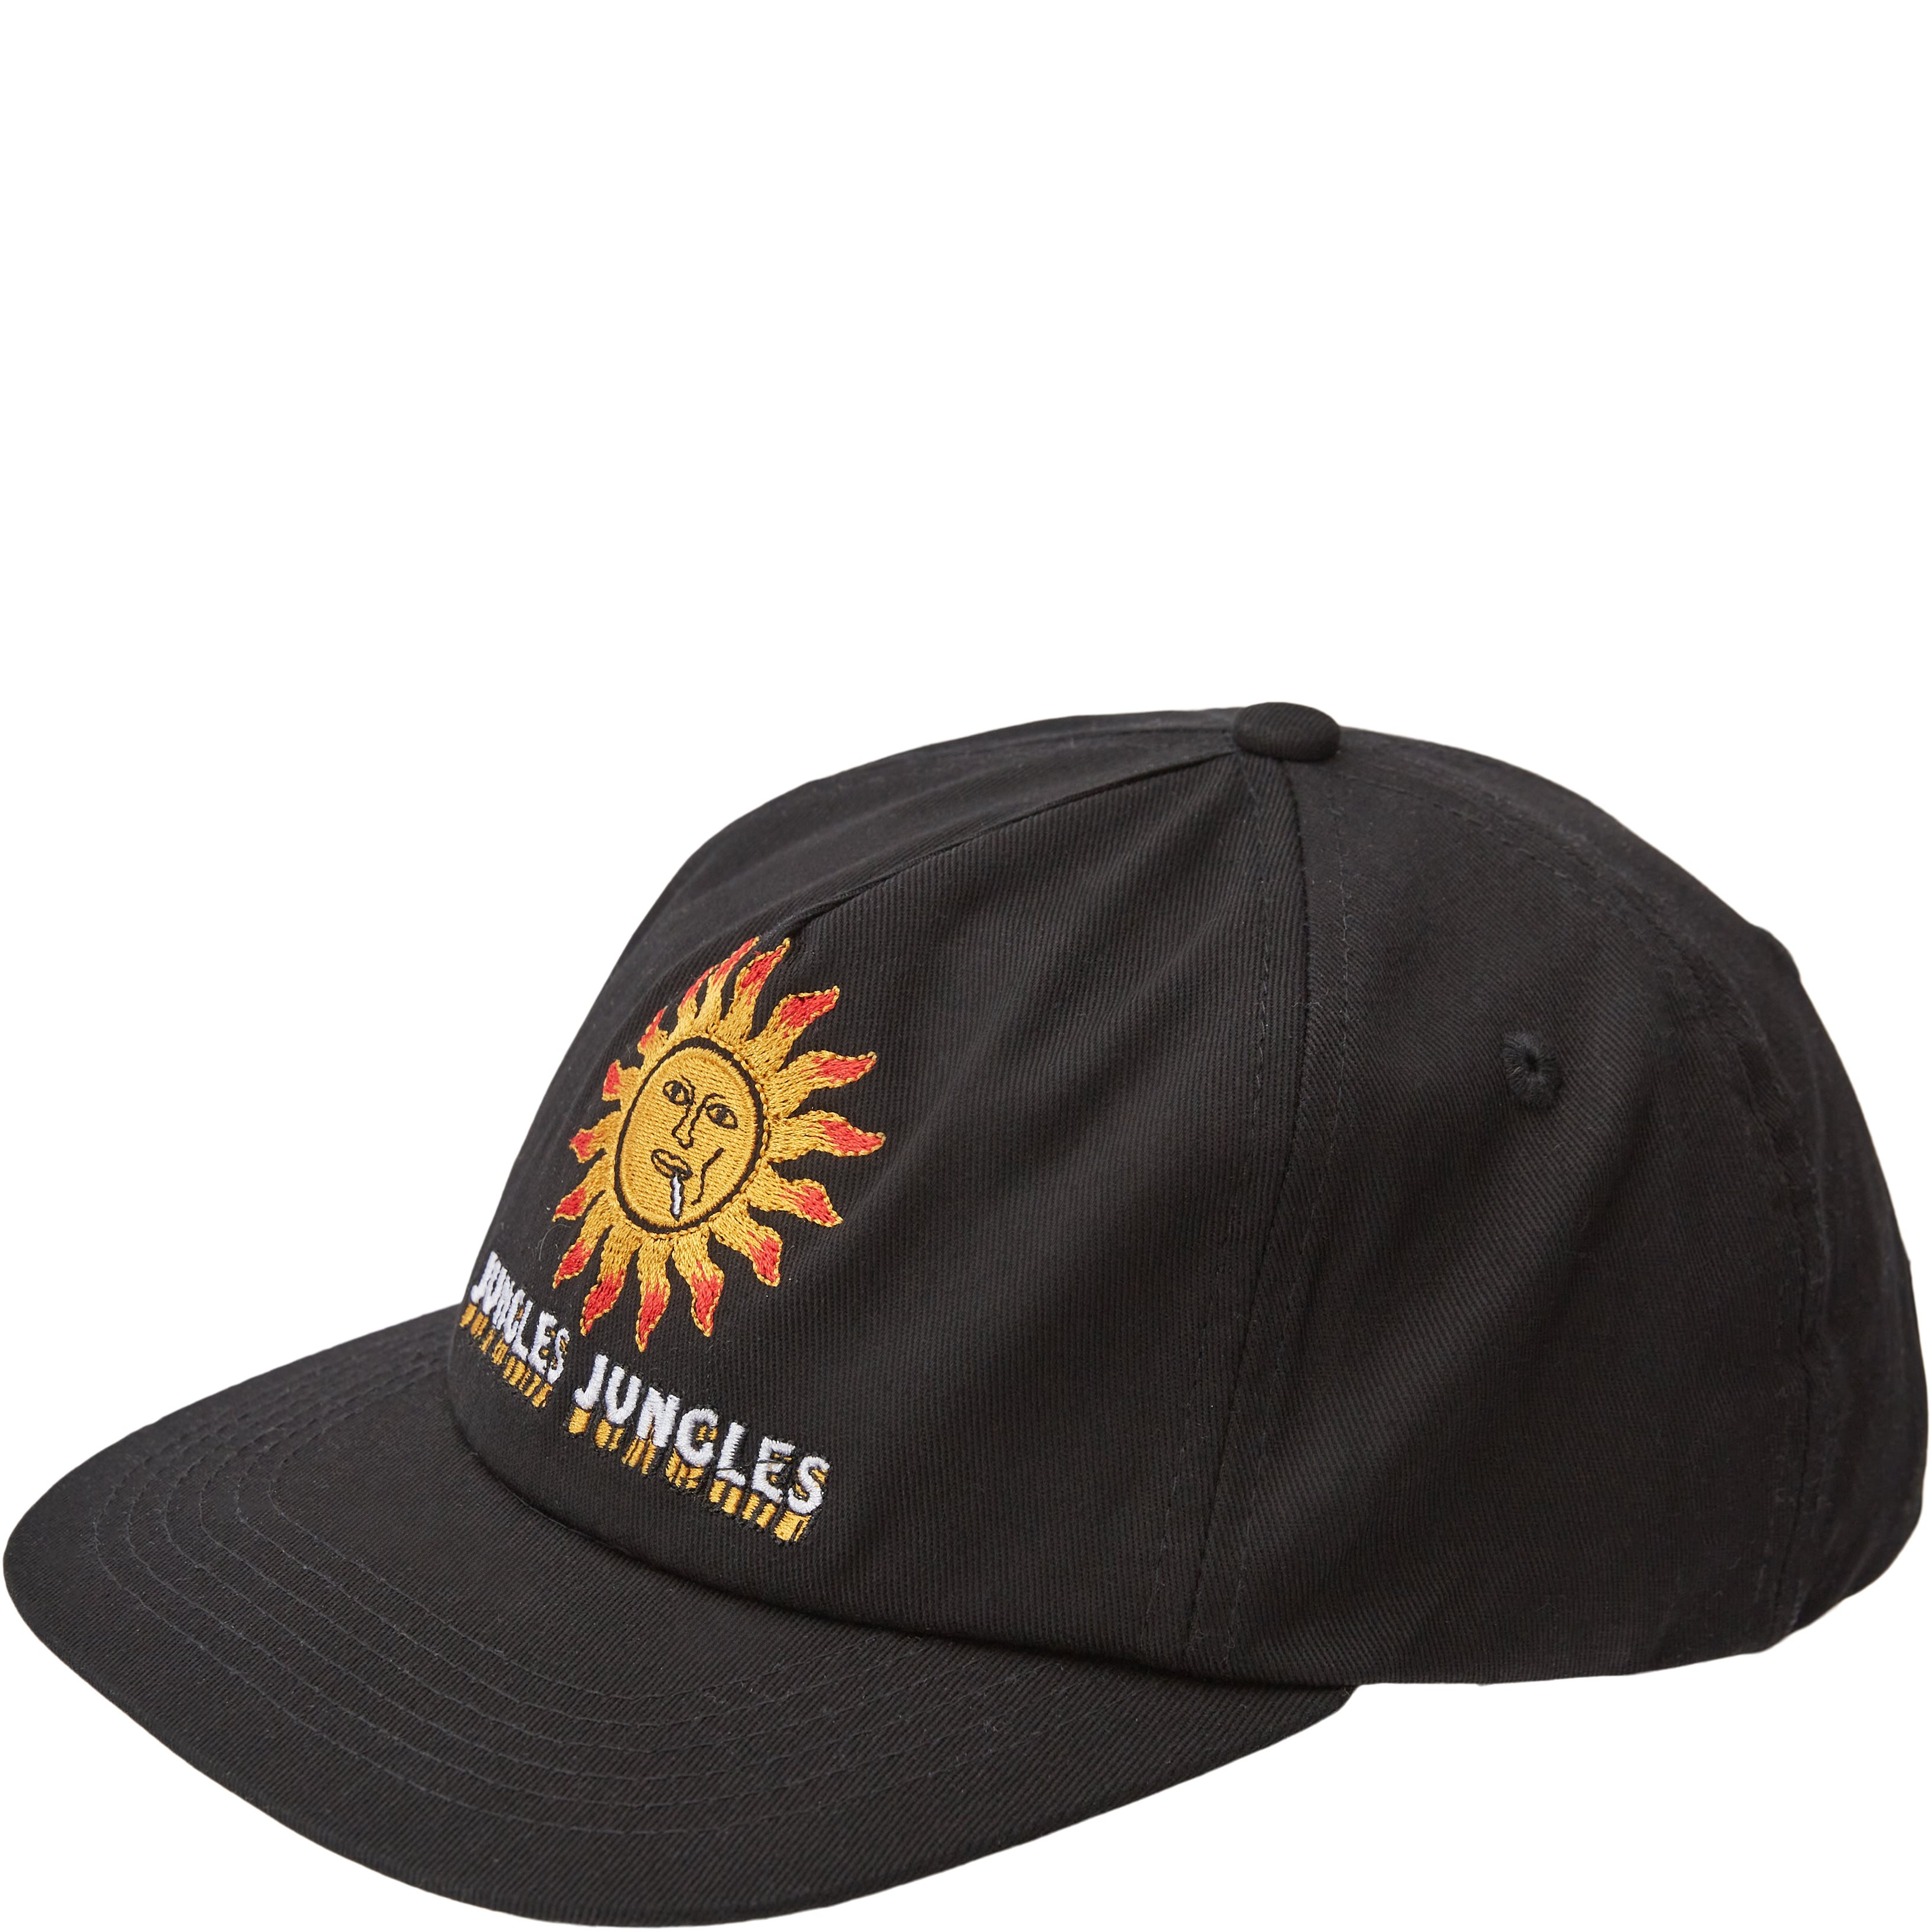 Smoking Sun Cap - Caps - Black